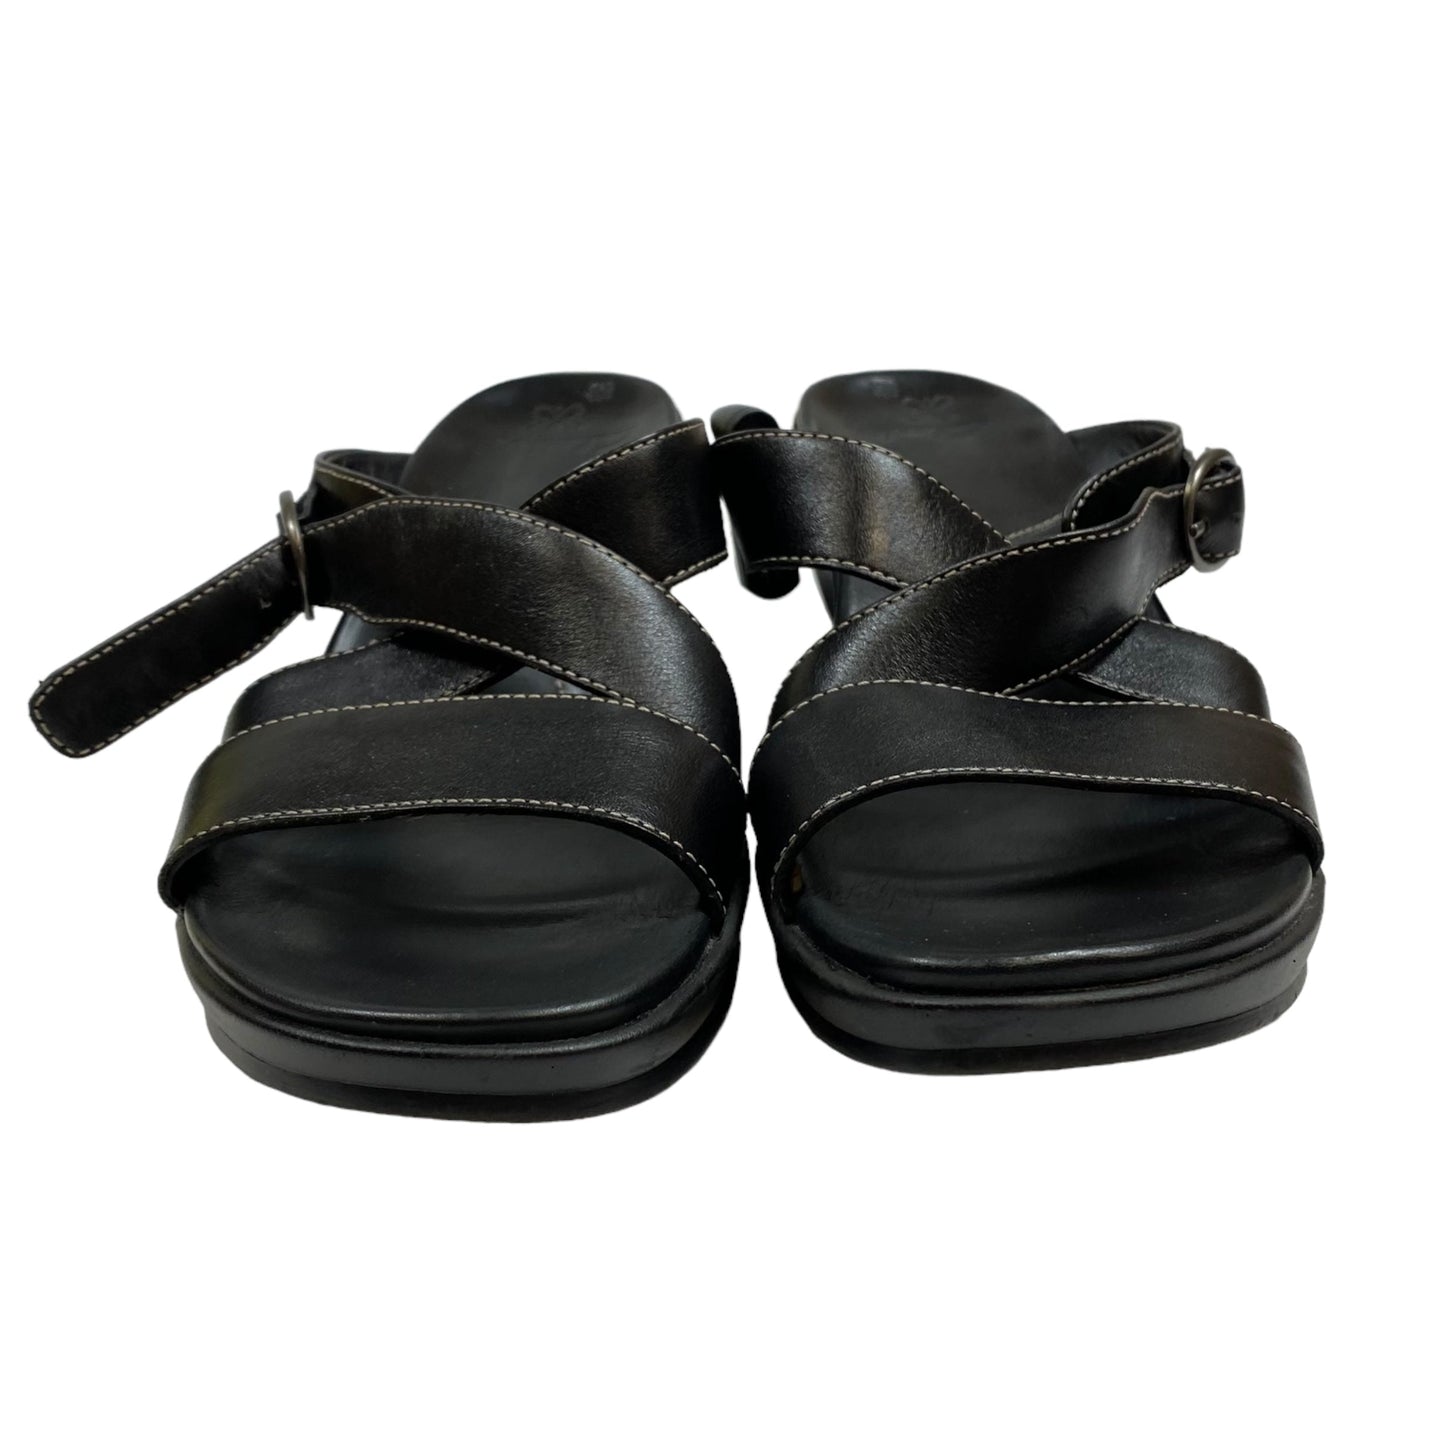 Sandals Heels Stiletto By Clarks  Size: 9